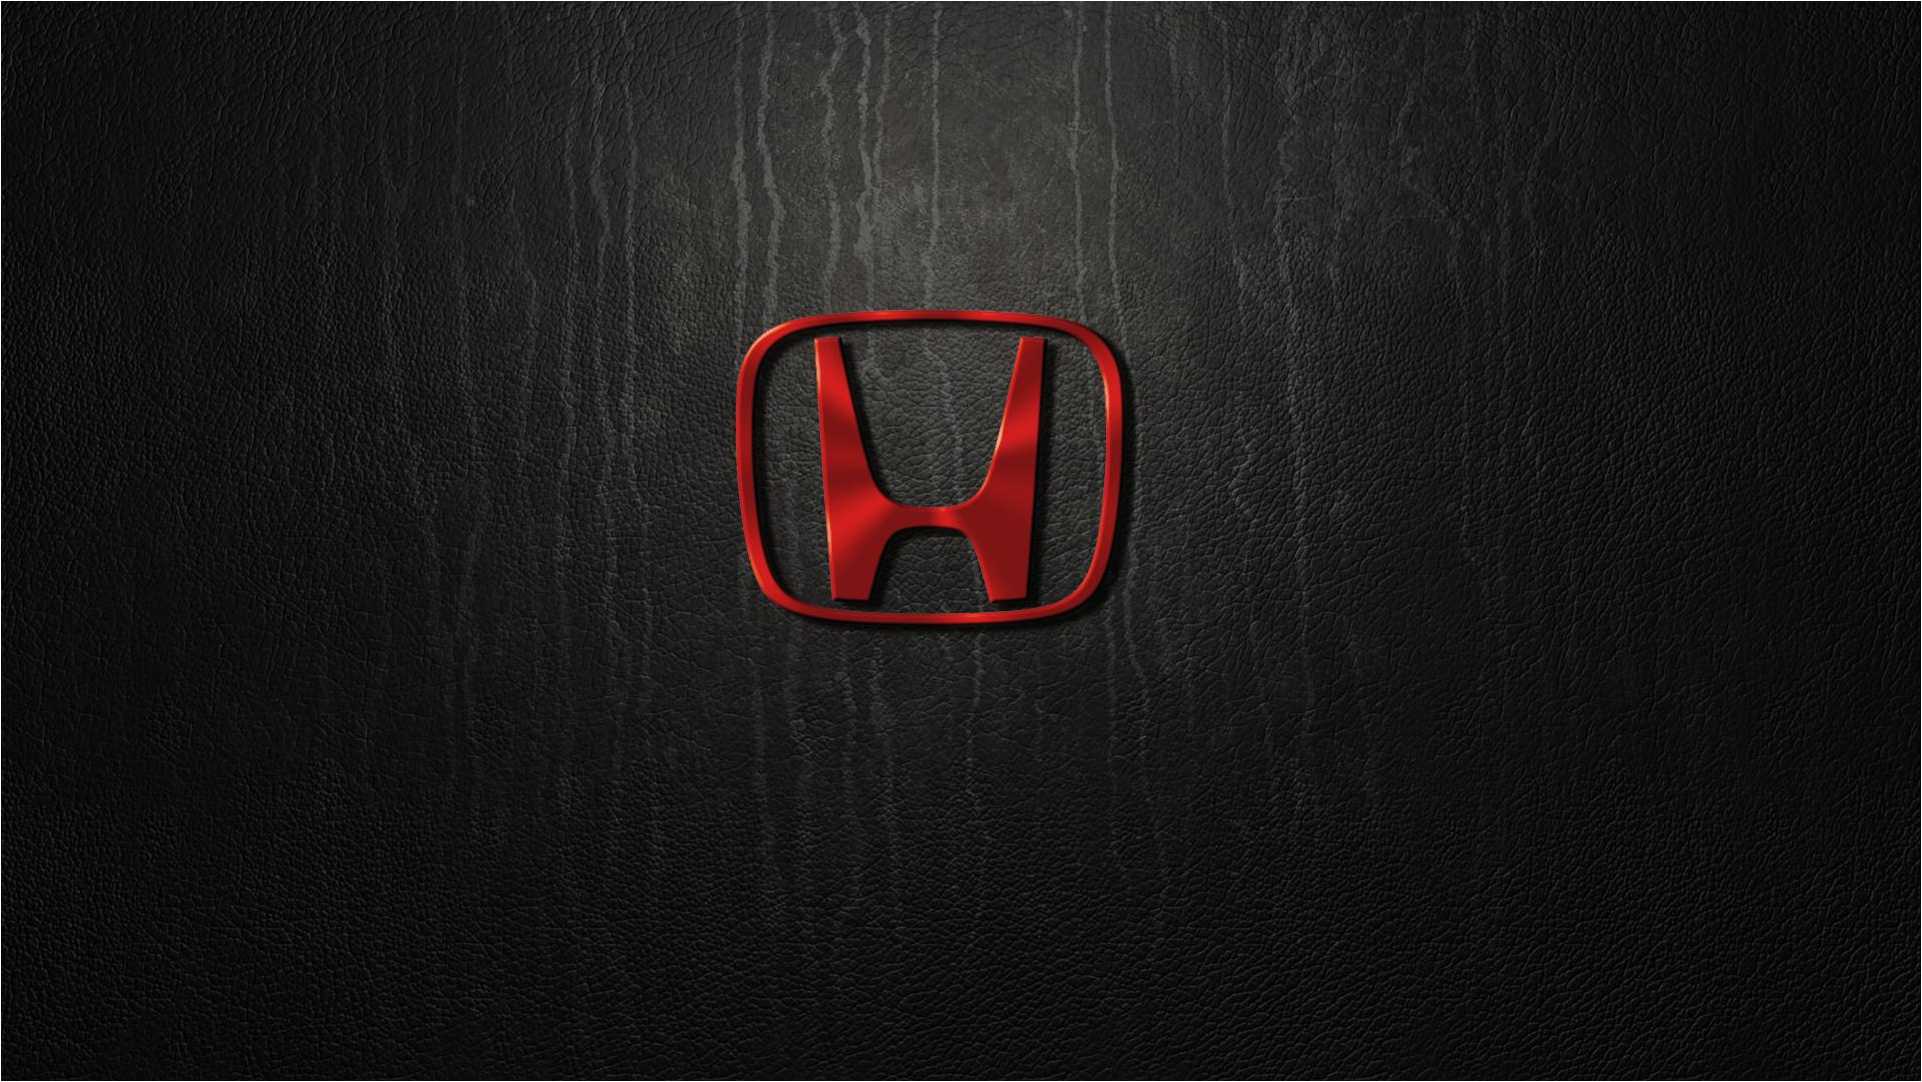 Honda Wallpaper, Honda High Quality #EI55 (Mobile And Desktop) Pics